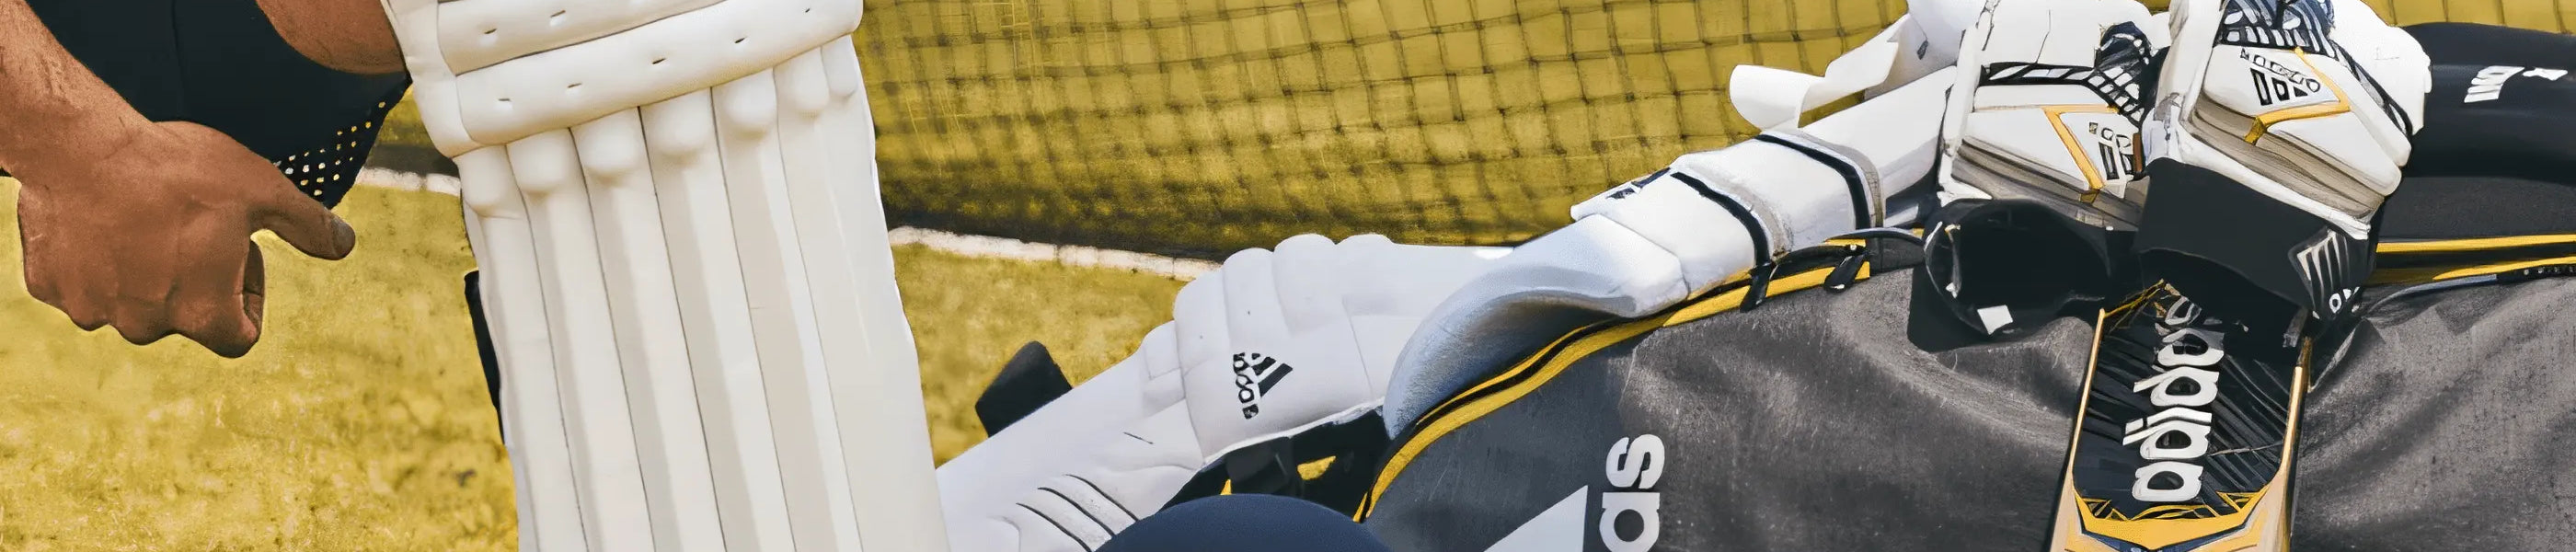 Adidas XT Batting Gloves